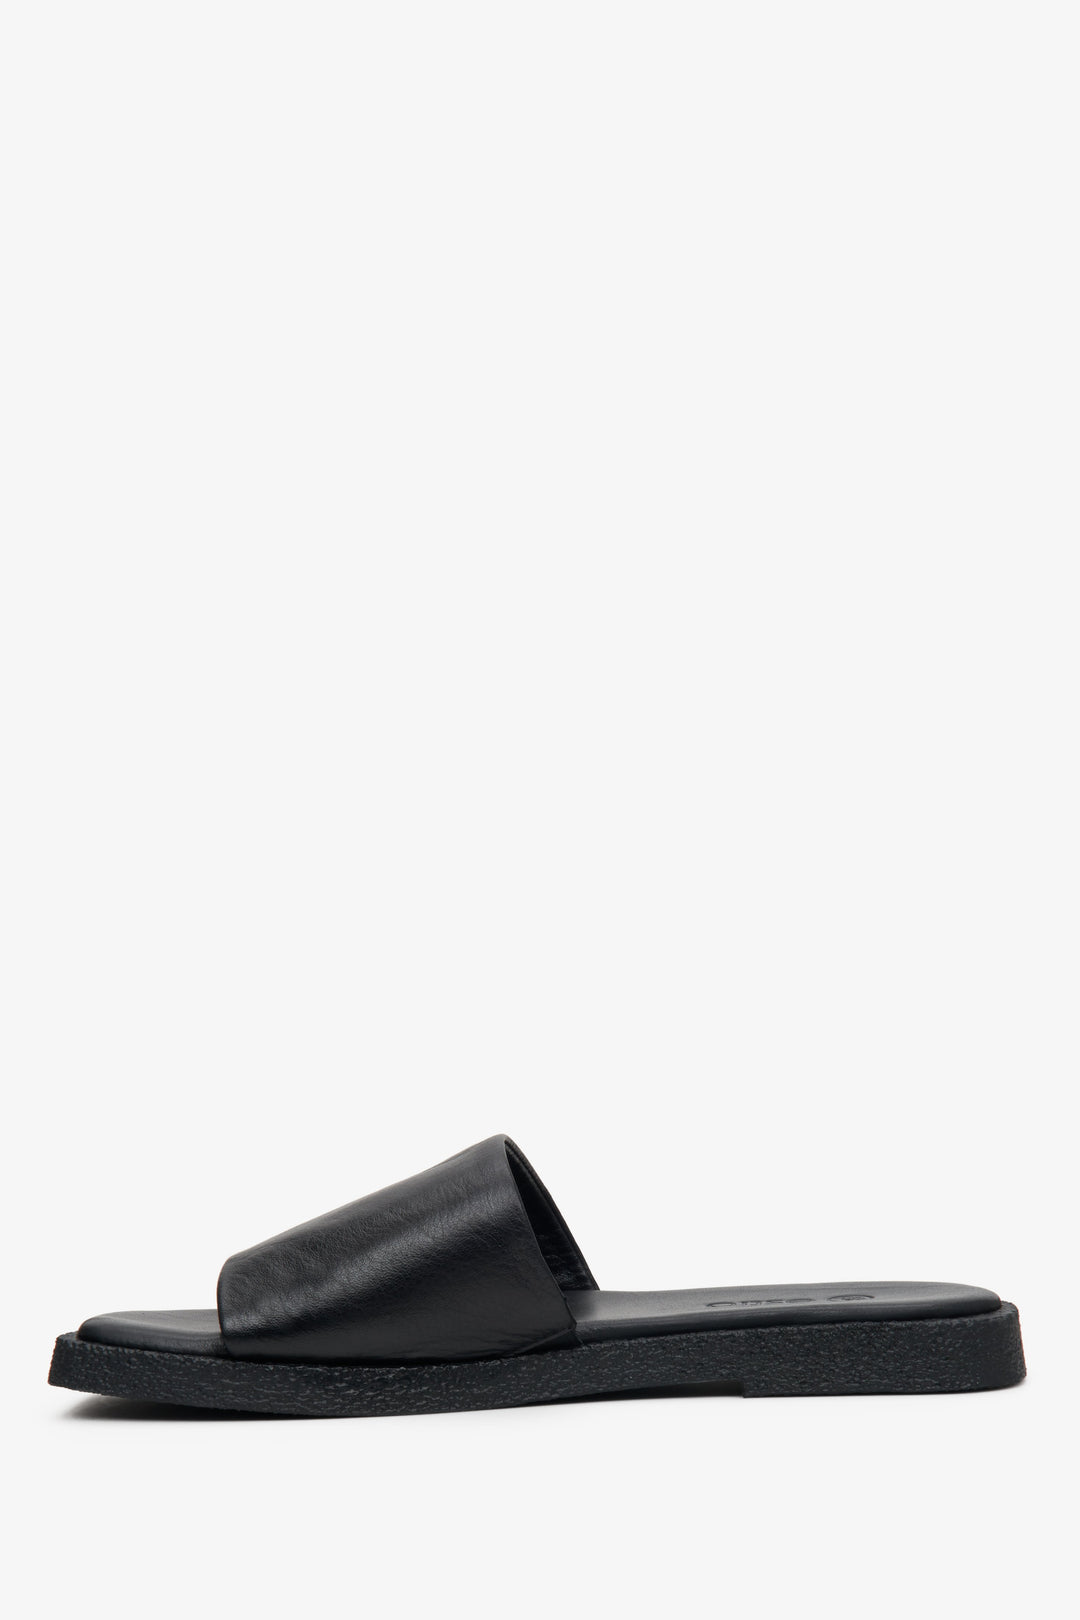 Women's Estro leather flat slide sandals in black - shoe profile.